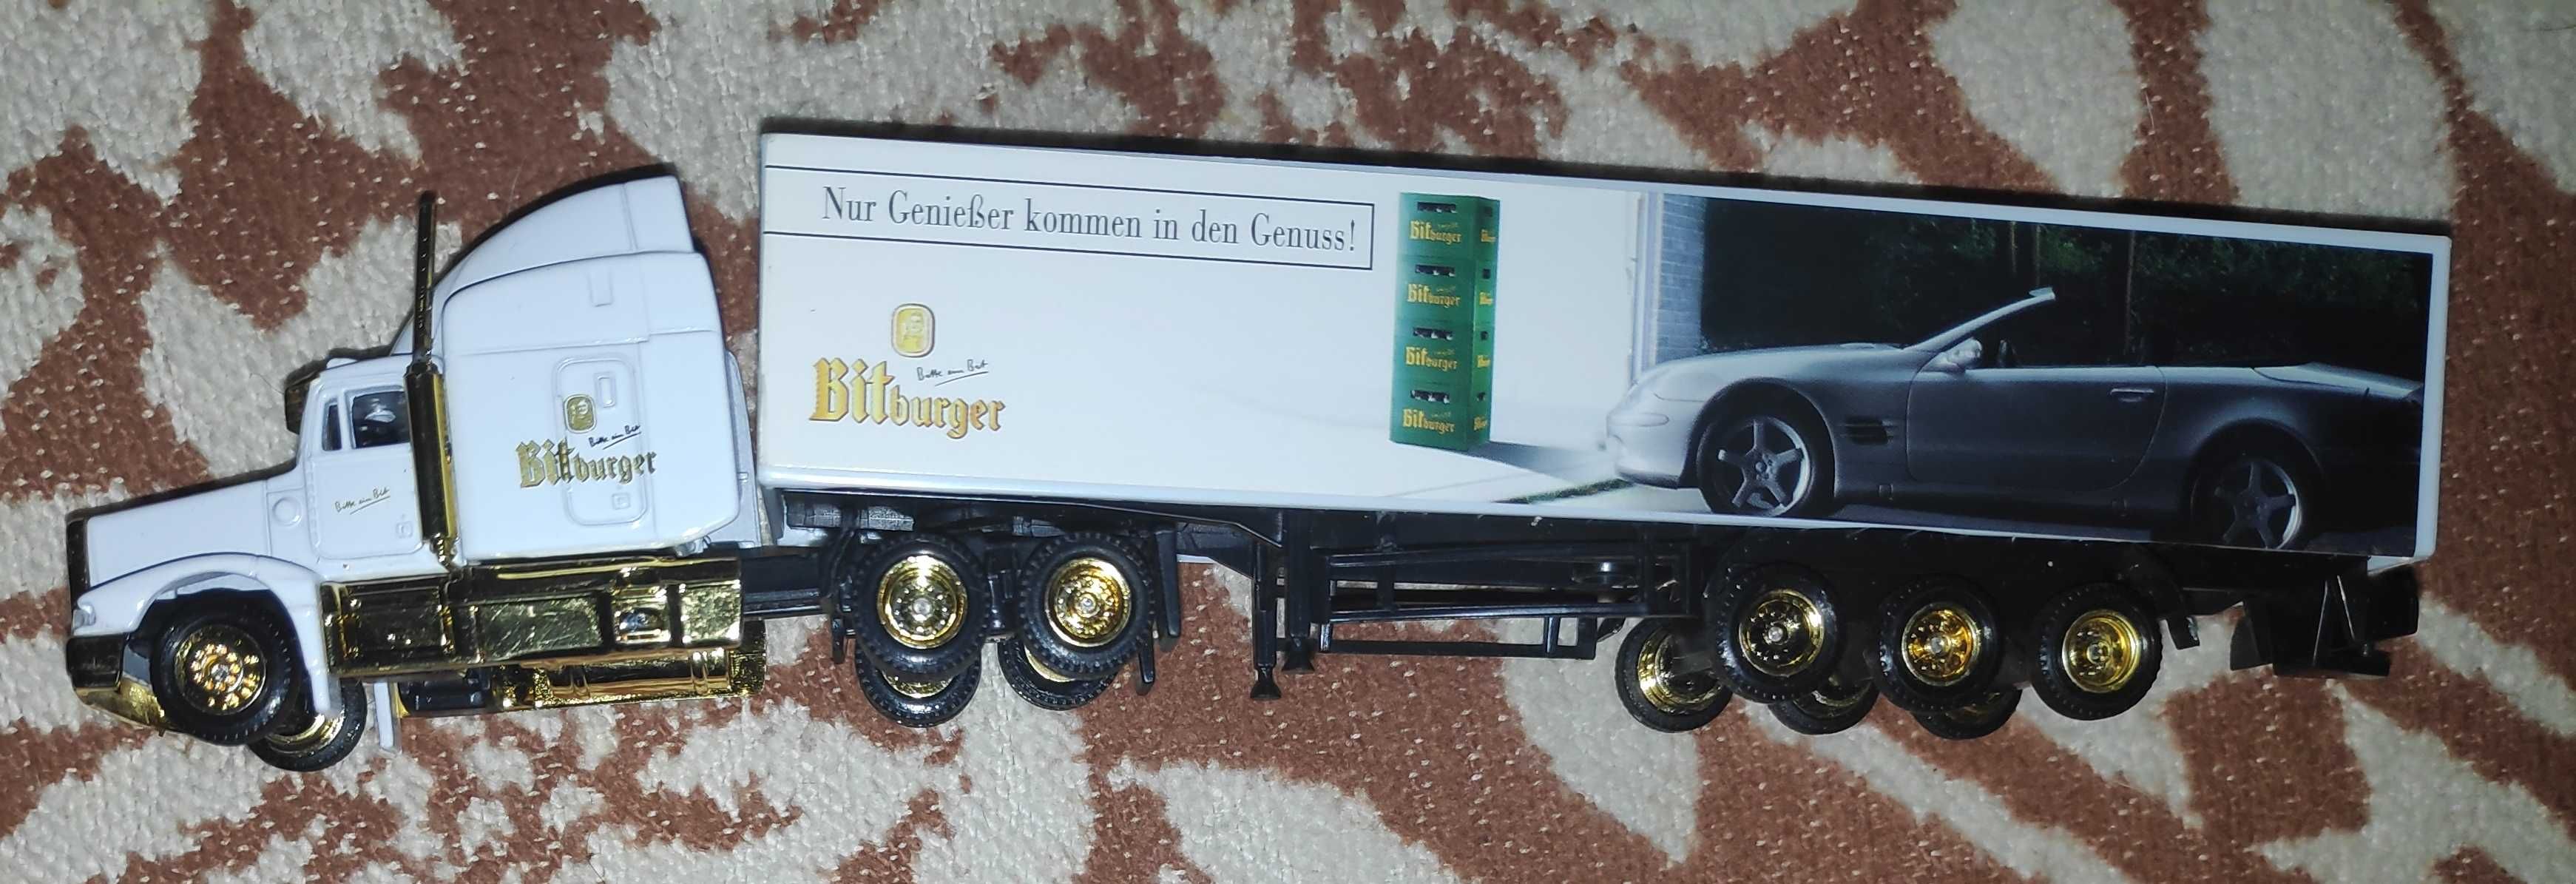 Jucarii camioane colectie DE Haribo - German collection toy trucks